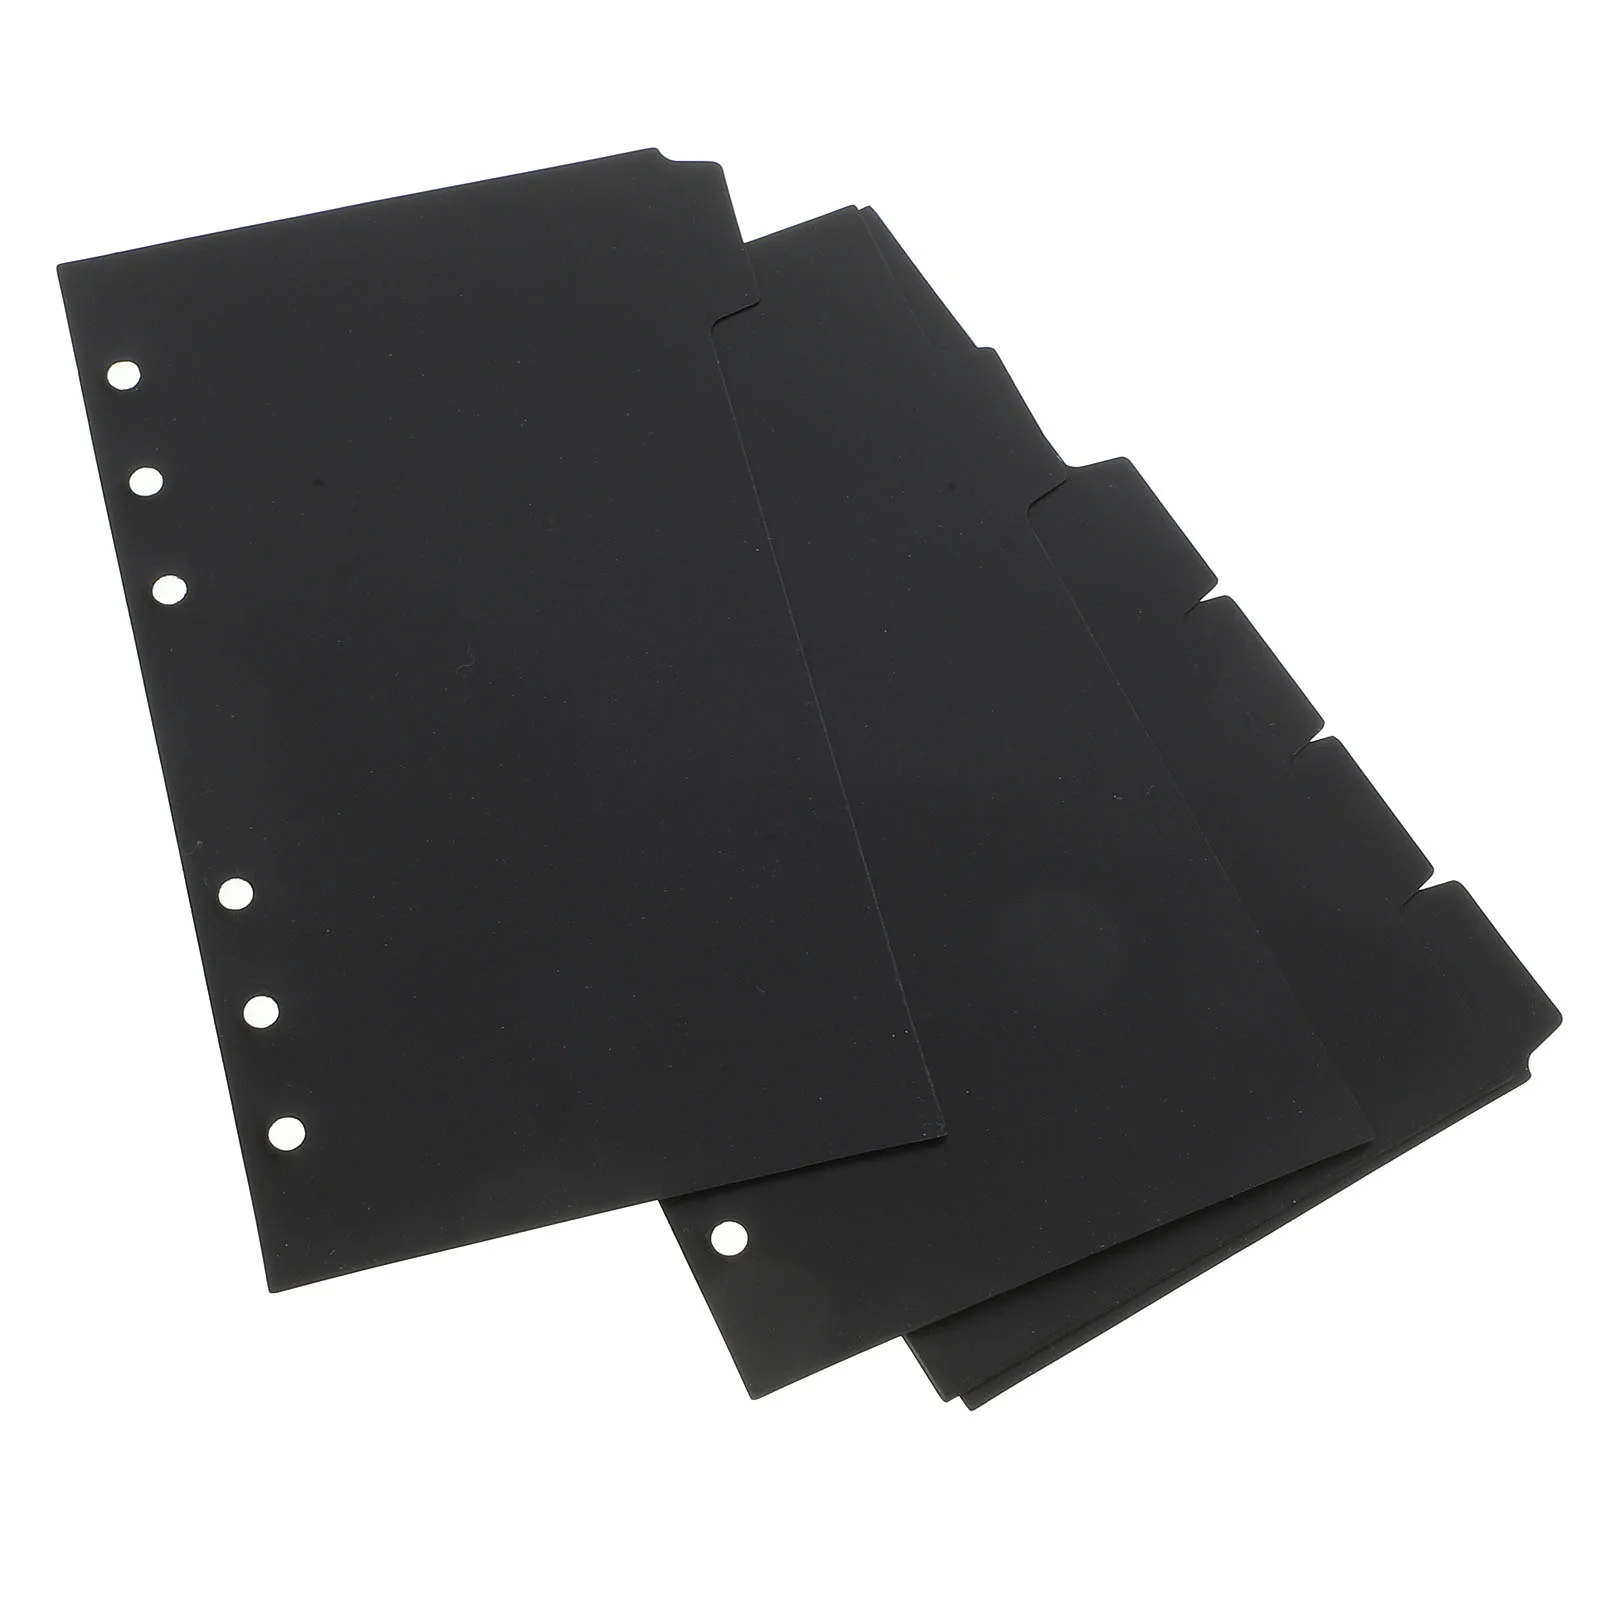 18 Sheets of Plastic Binder Dividers Notepad Binder Dividers Tabs Loose-leaf Page Markers